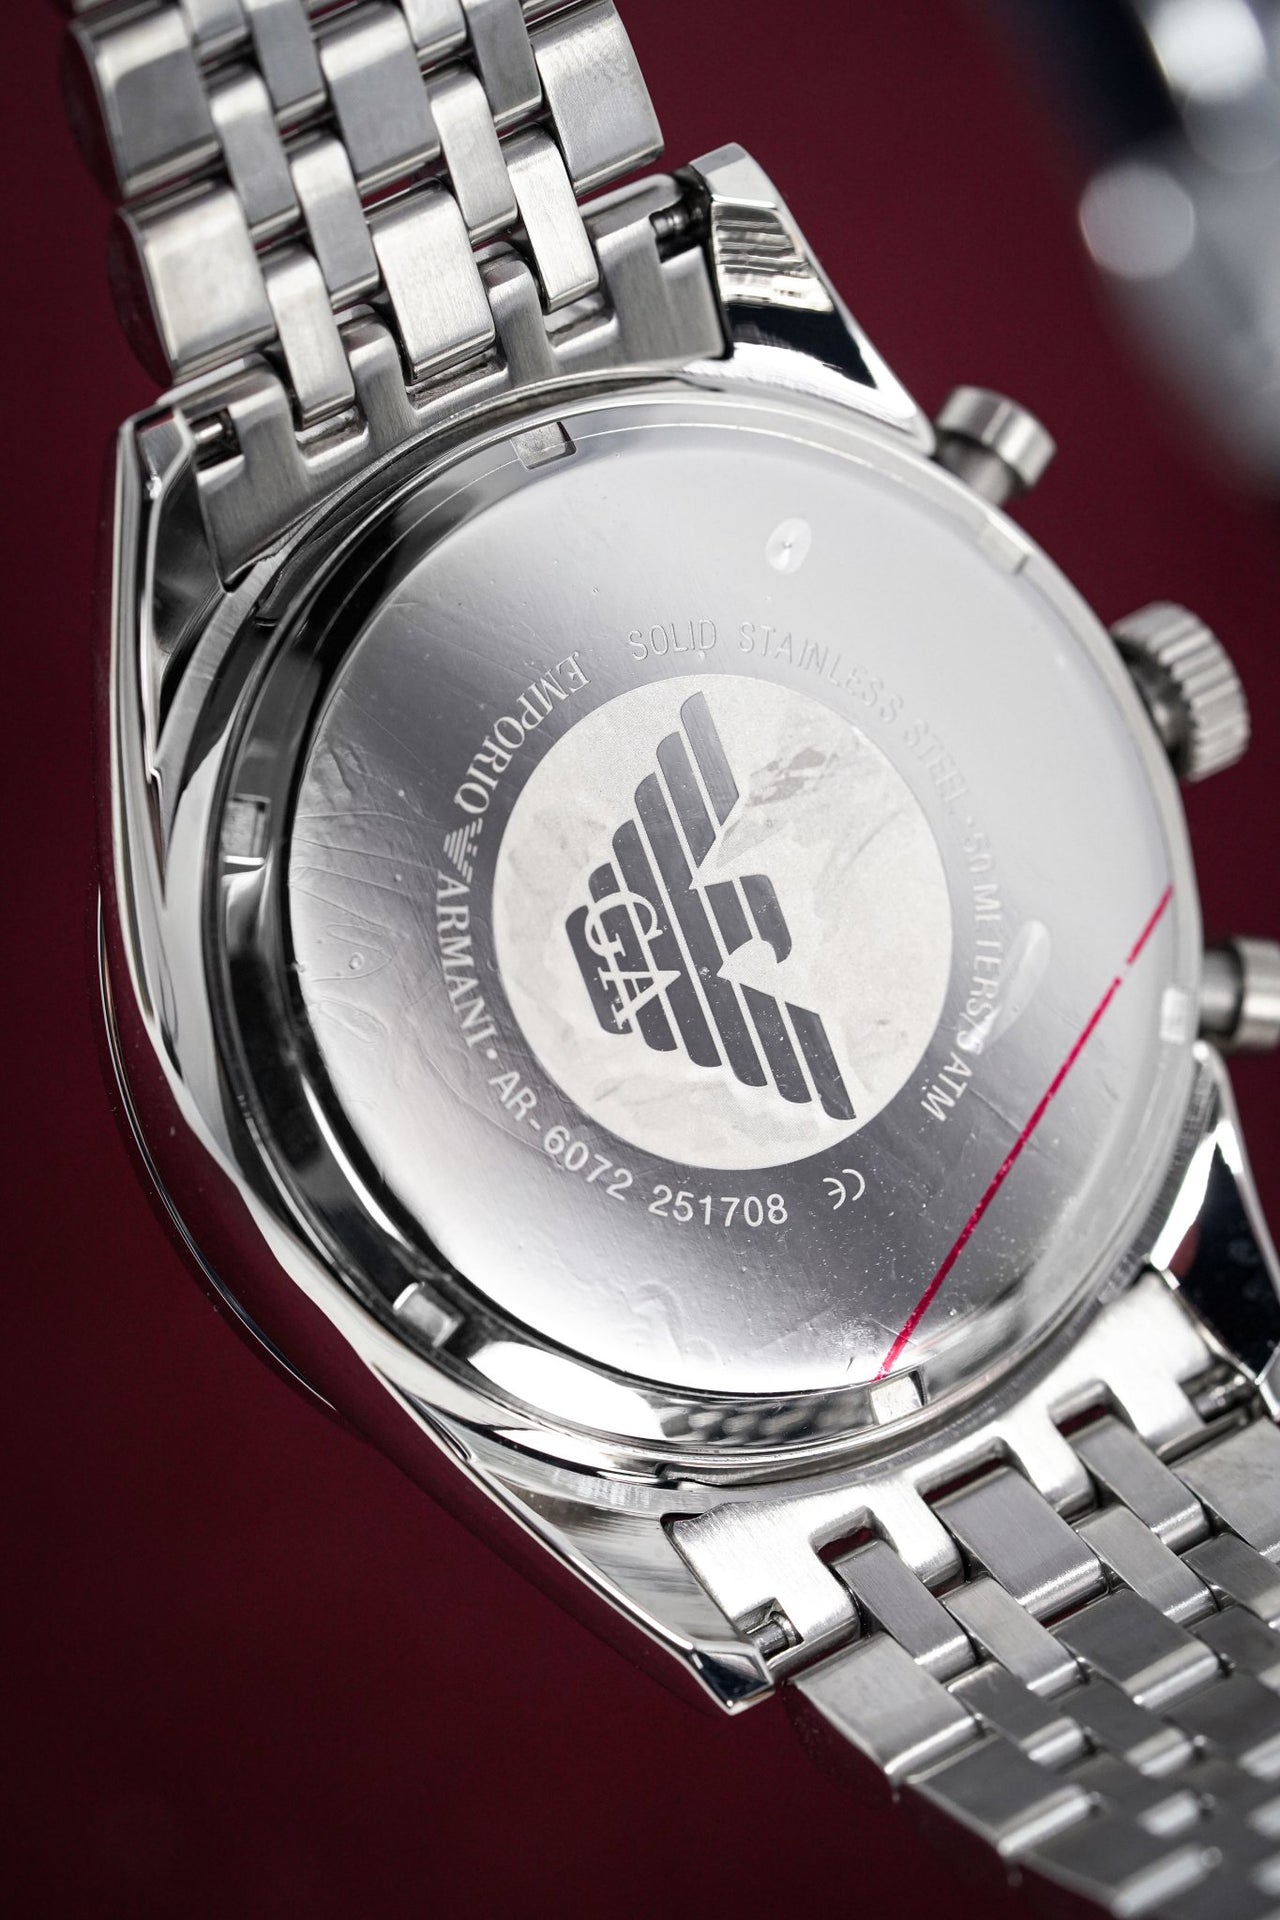 Emporio Armani Men's Tazio Chronograph Watch Blue AR6072 - Watches & Crystals